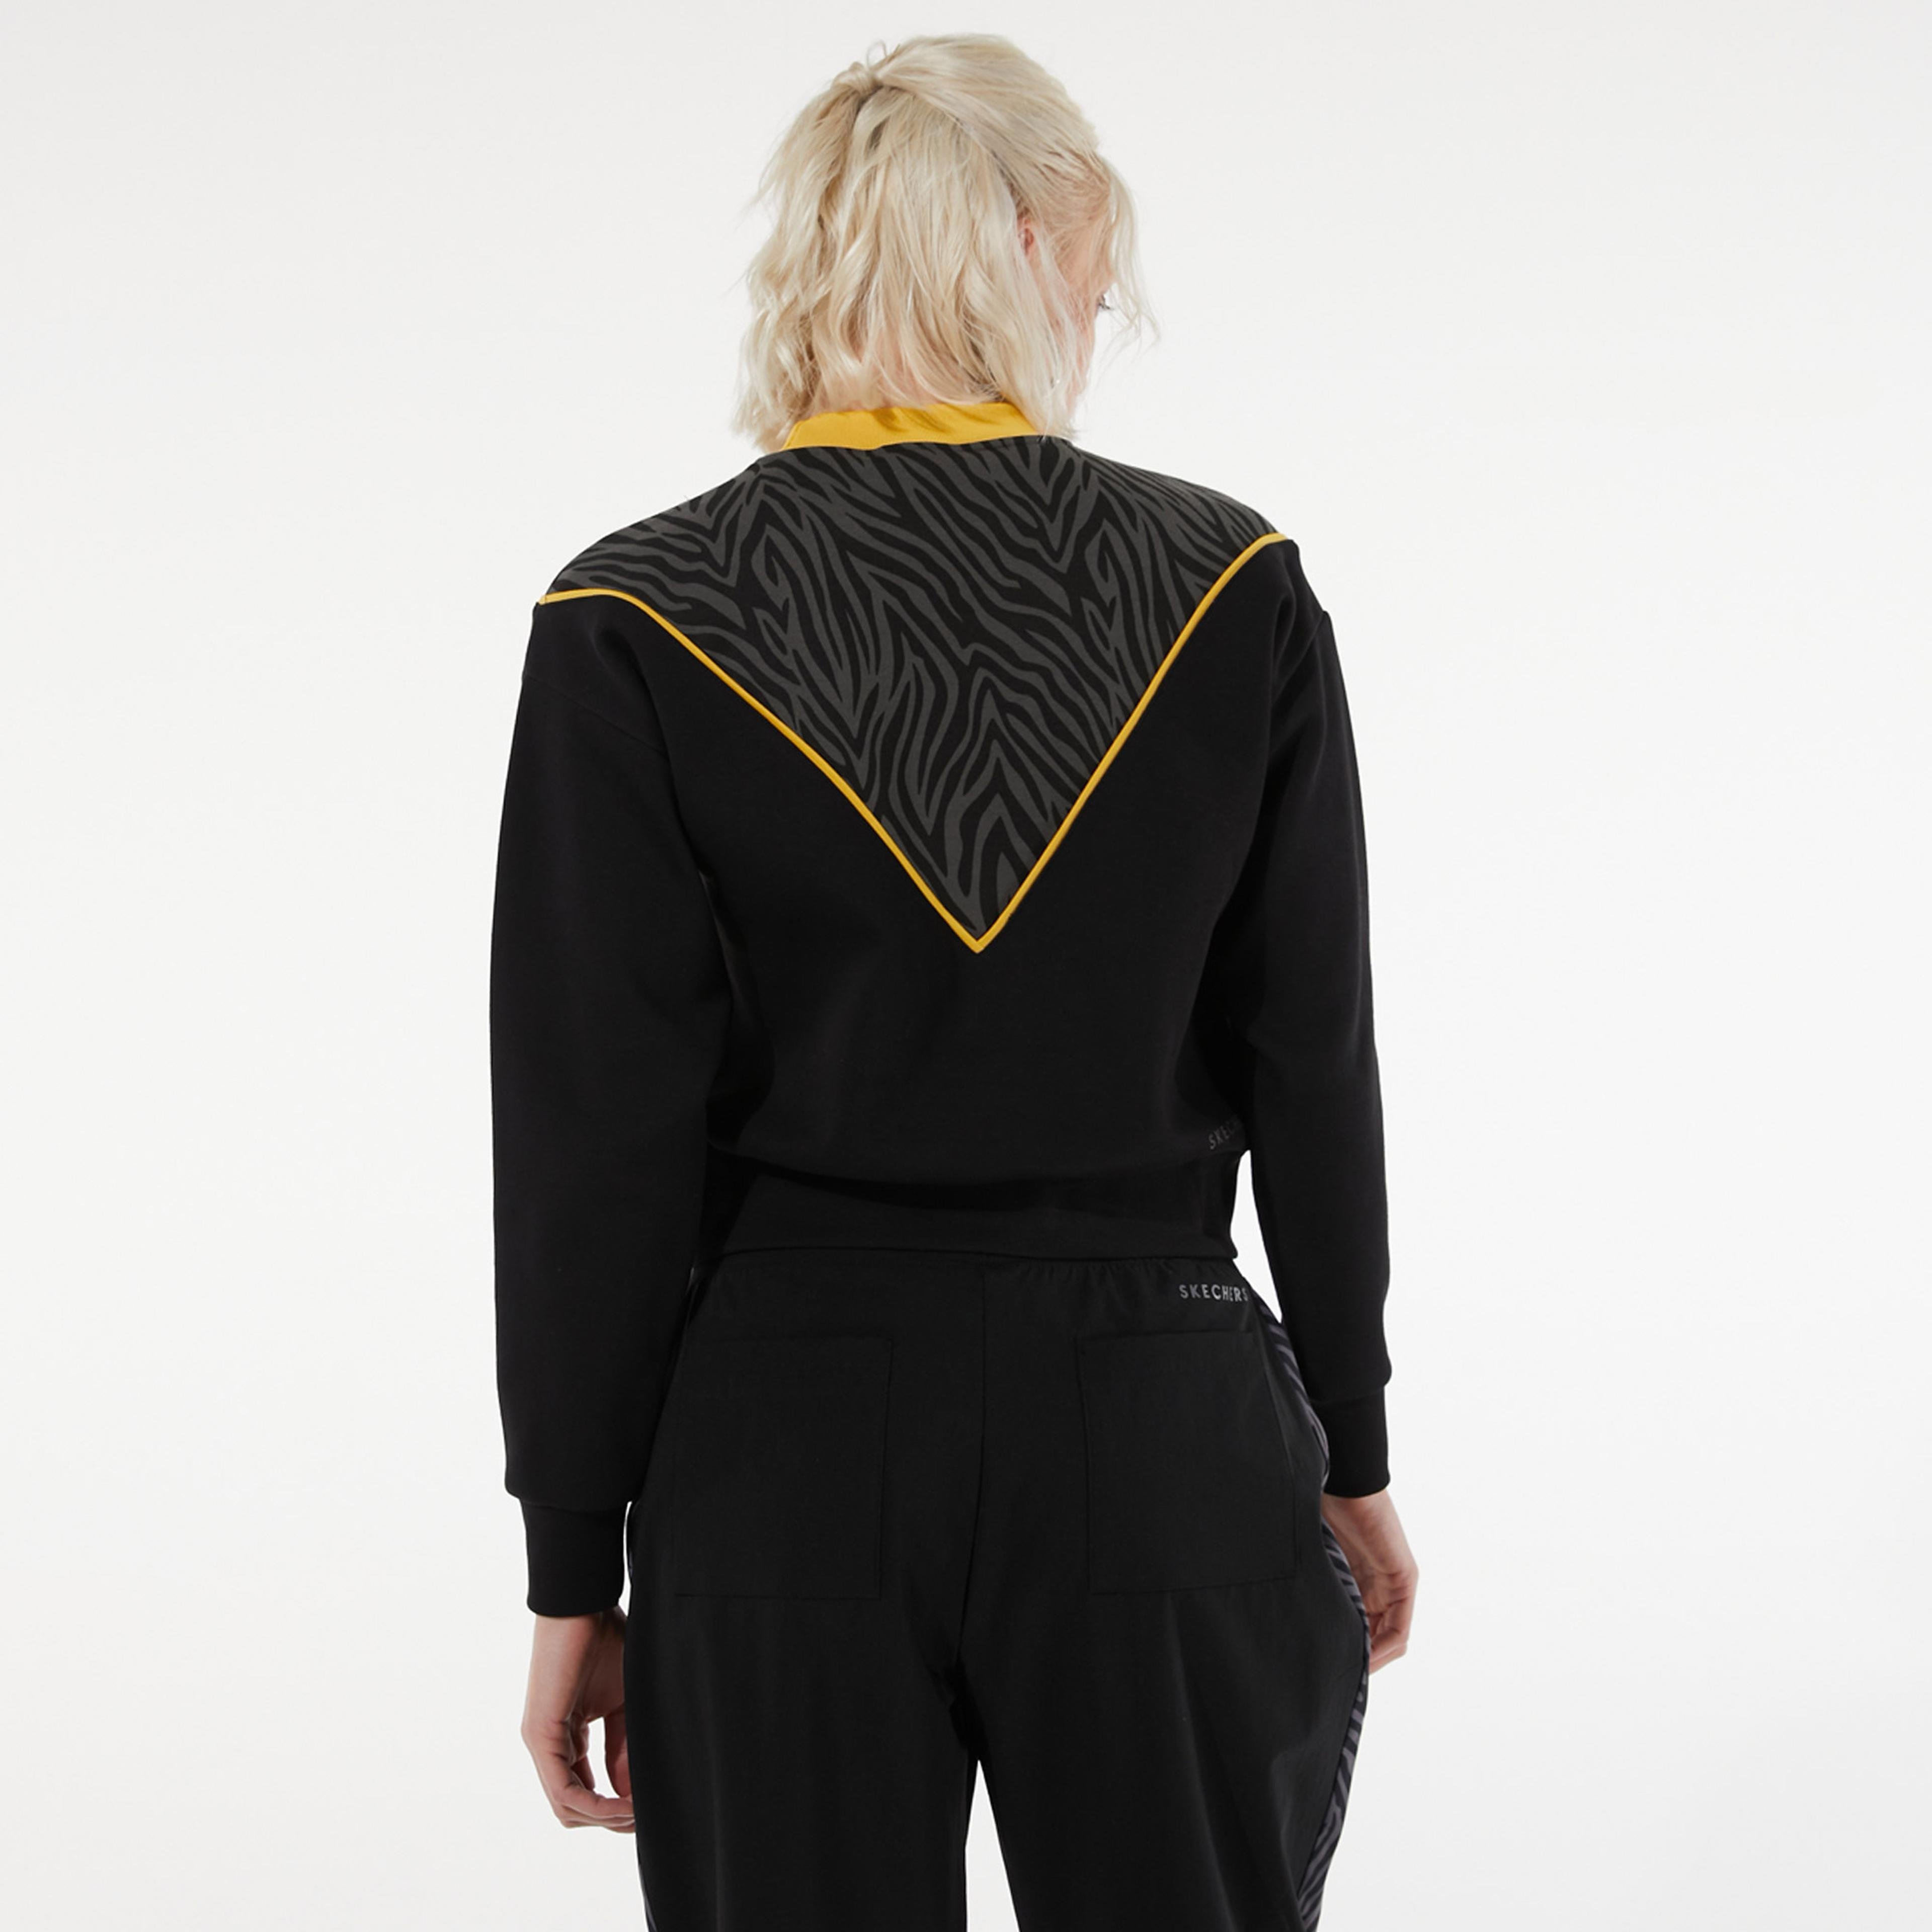 Skechers Printed Panel Kadın Siyah Sweatshirt